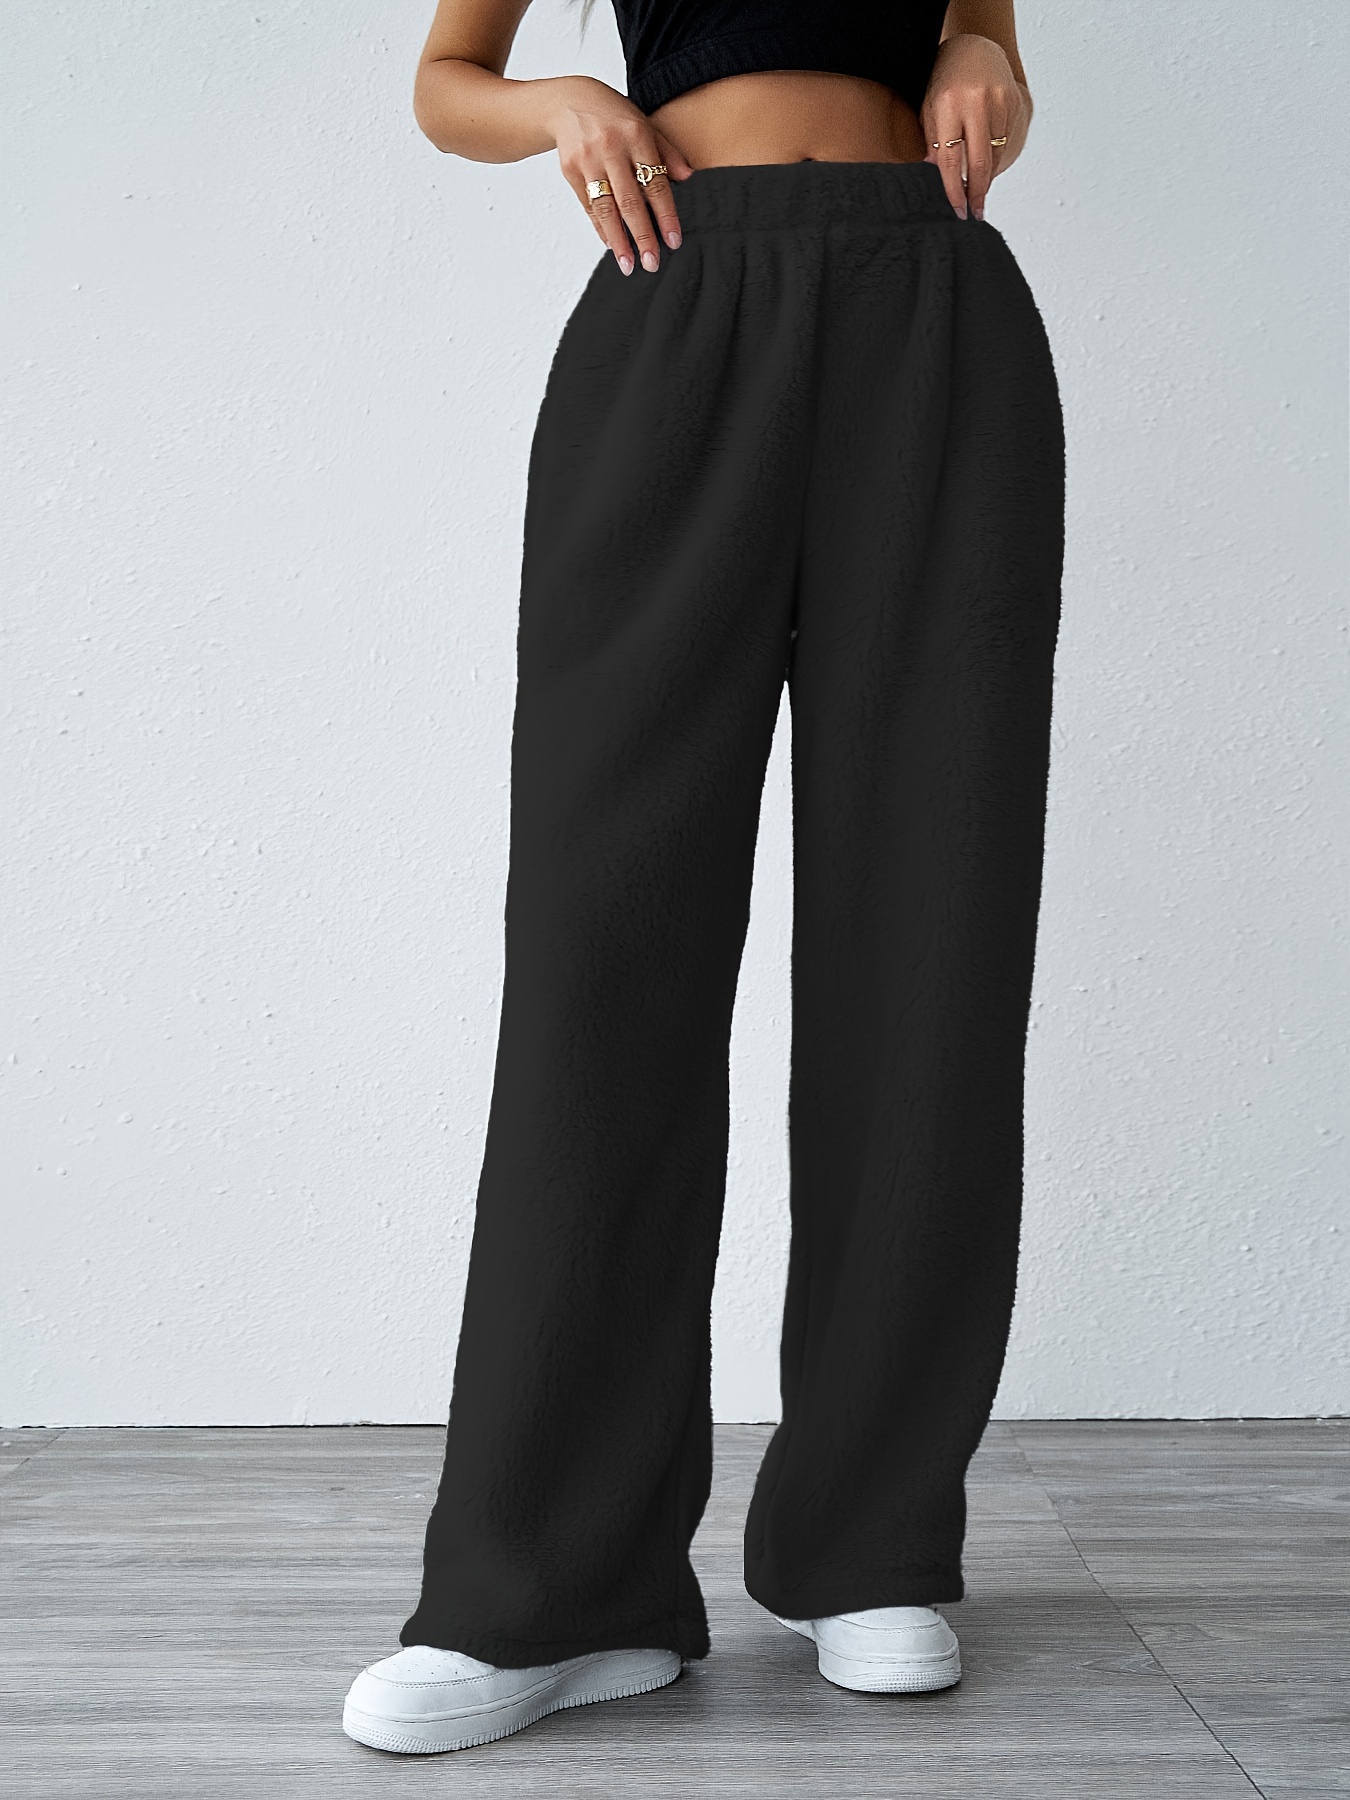 Women's Plus Size Pants Women's Loose Wide Leg Pants High Waist Straight  Pants Casual Pants Reduced Price Black 8(L)